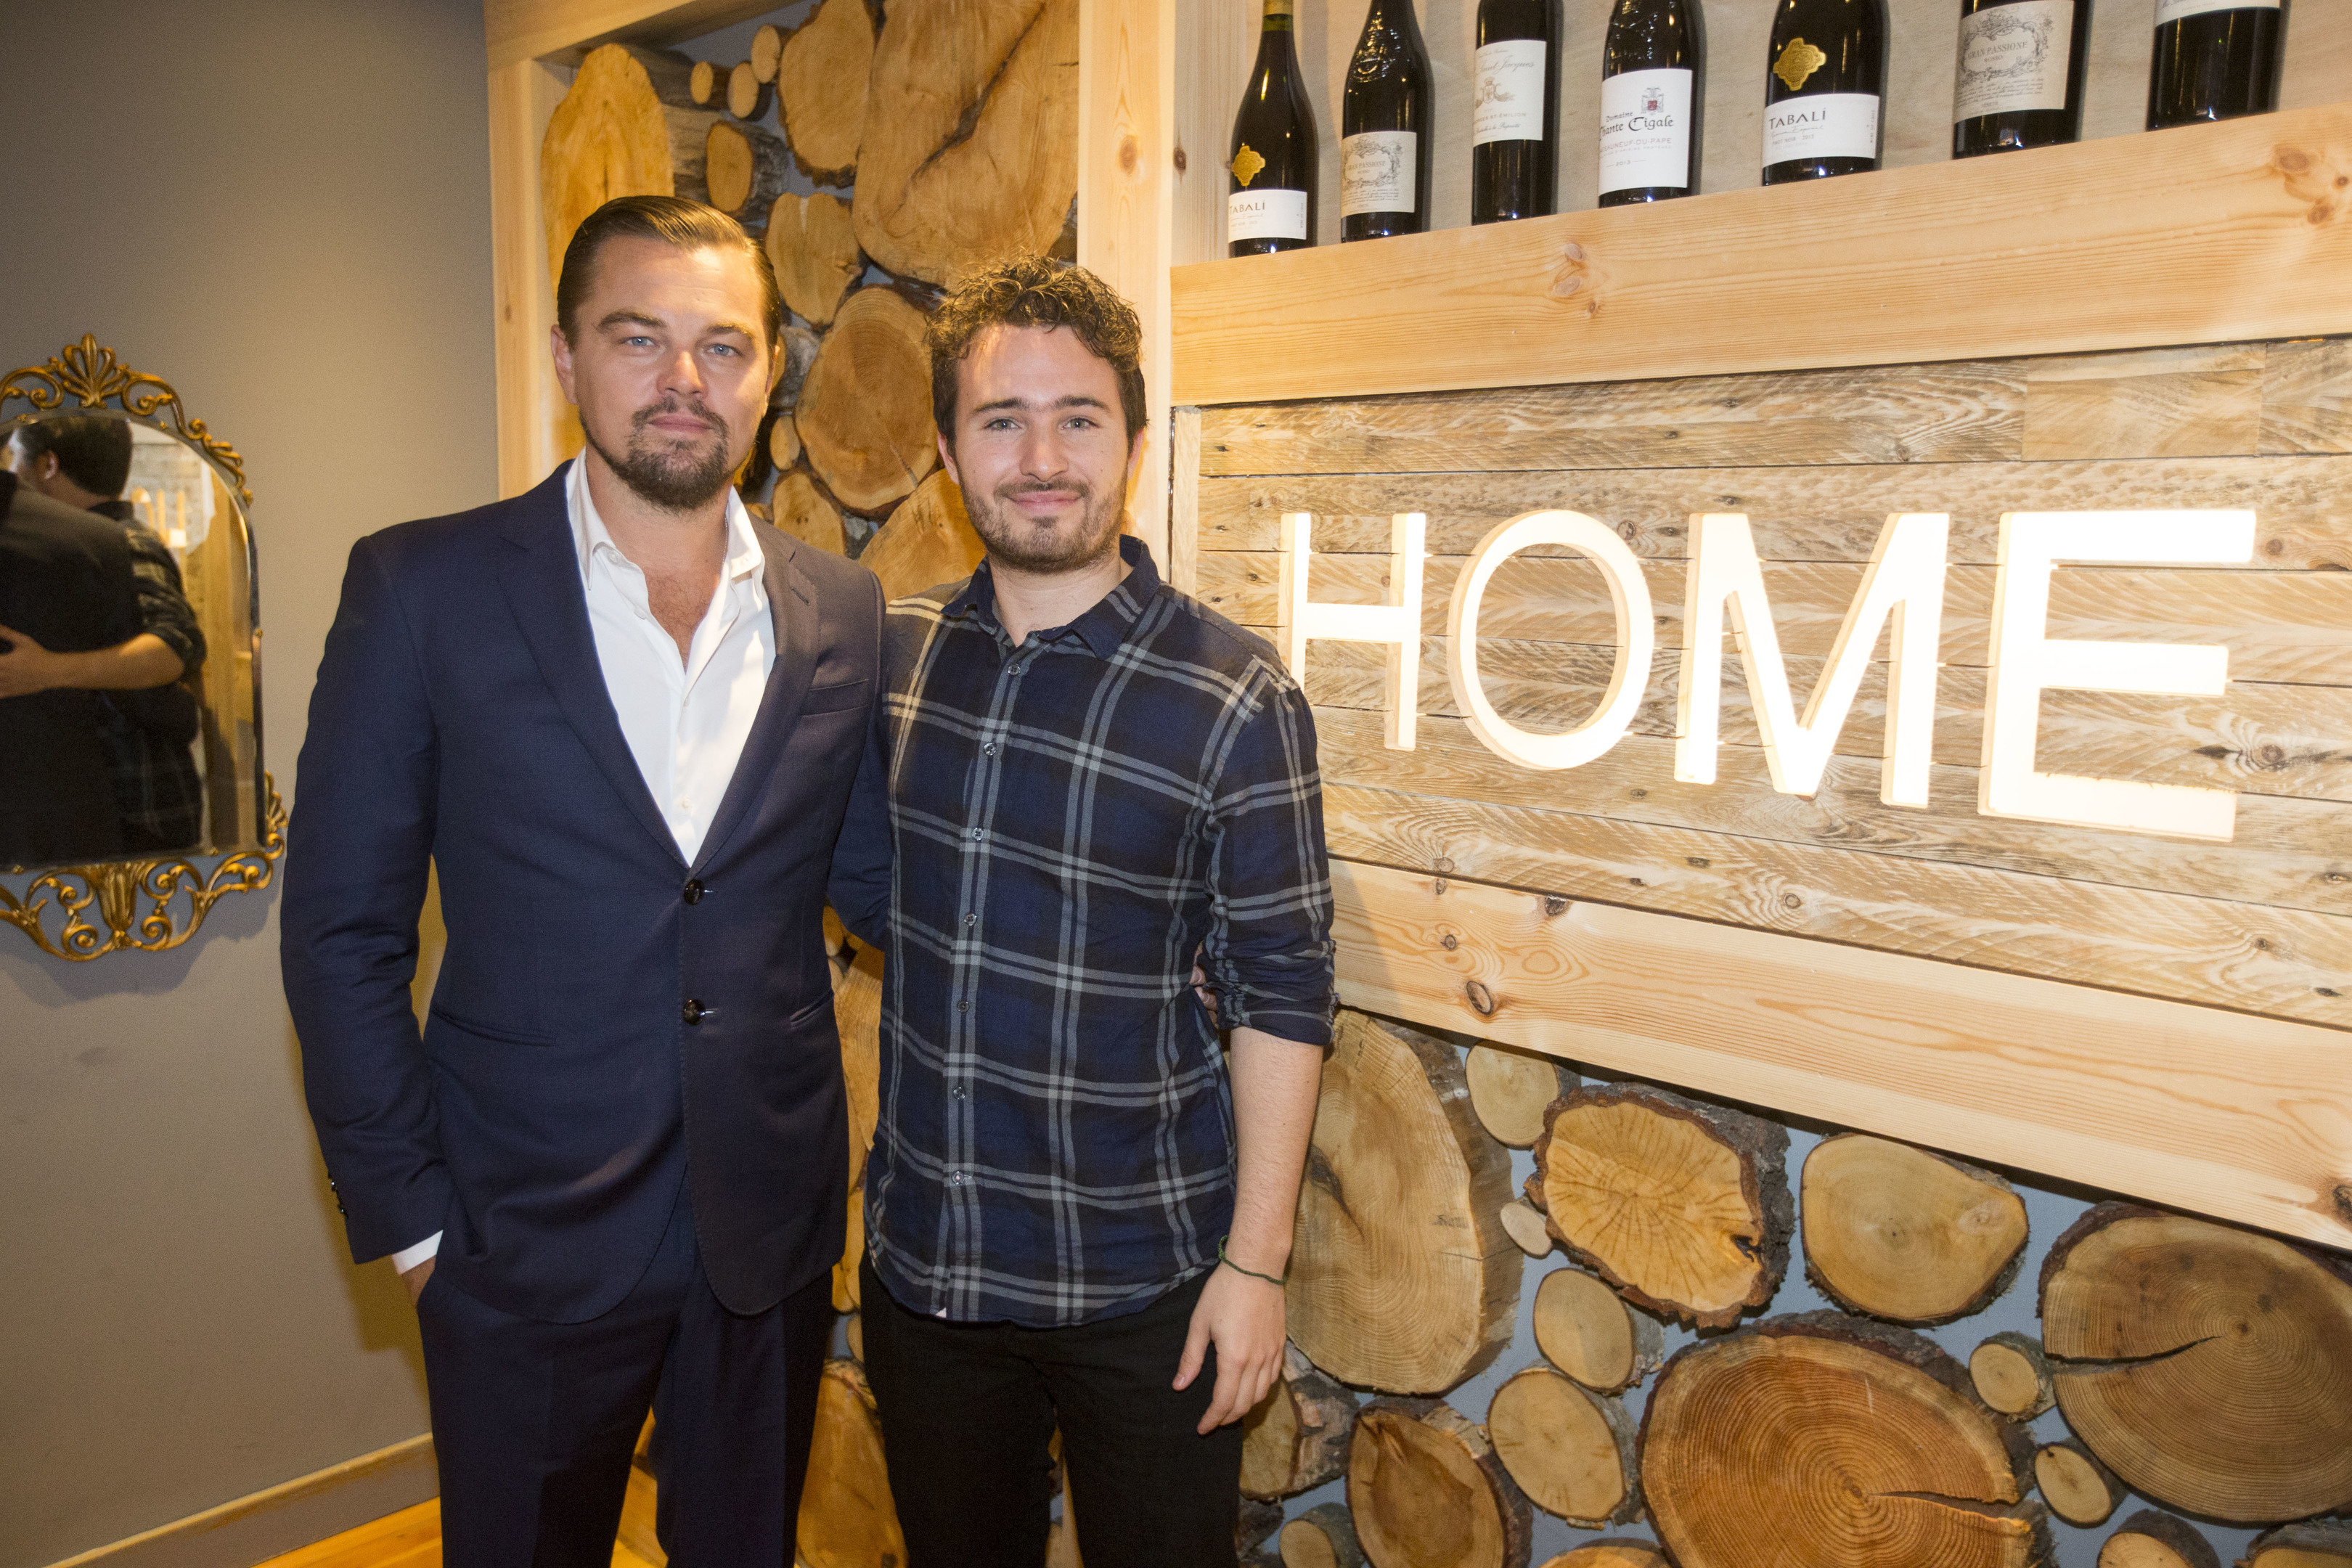 Leonardo DiCaprio with social entrepreneur Josh Littlejohn at Social Bite restaurant, Home, in Edinburgh, Scotland.